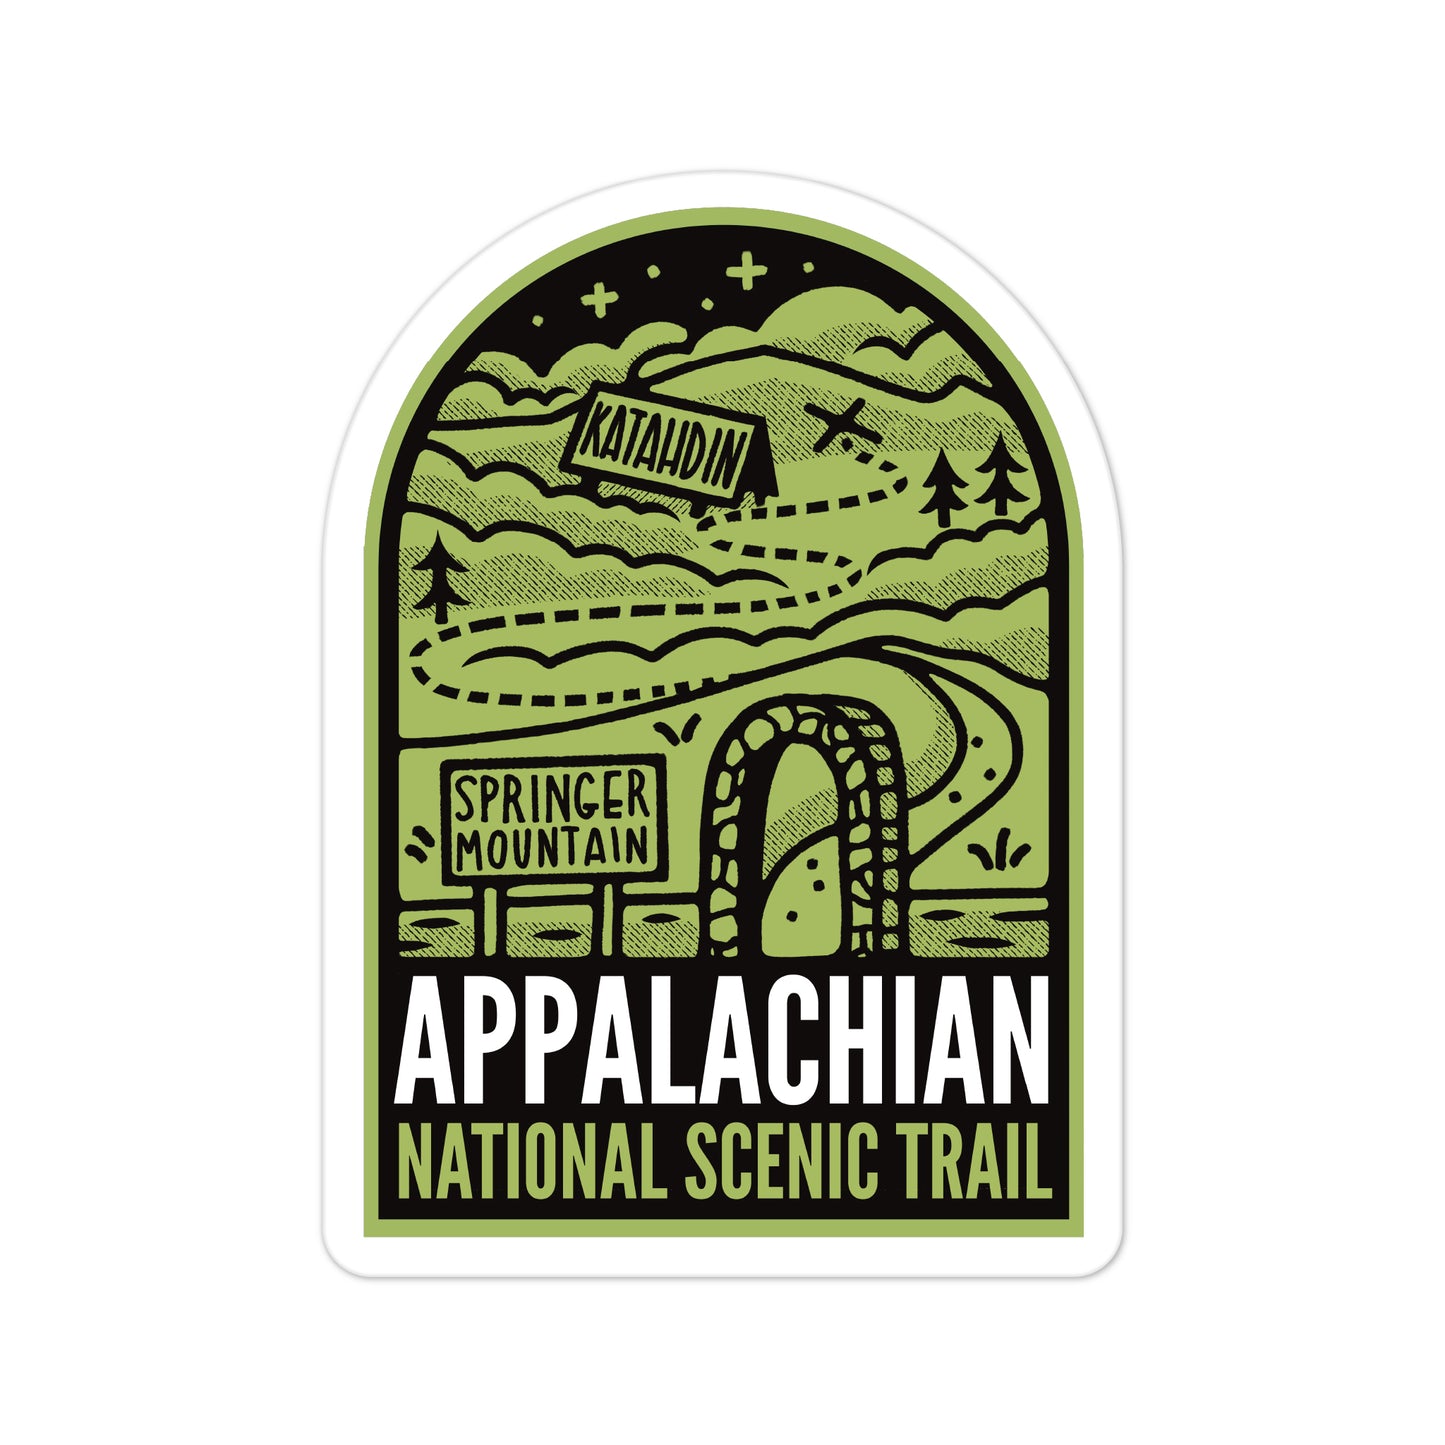 A sticker design of the Appalachian Trail